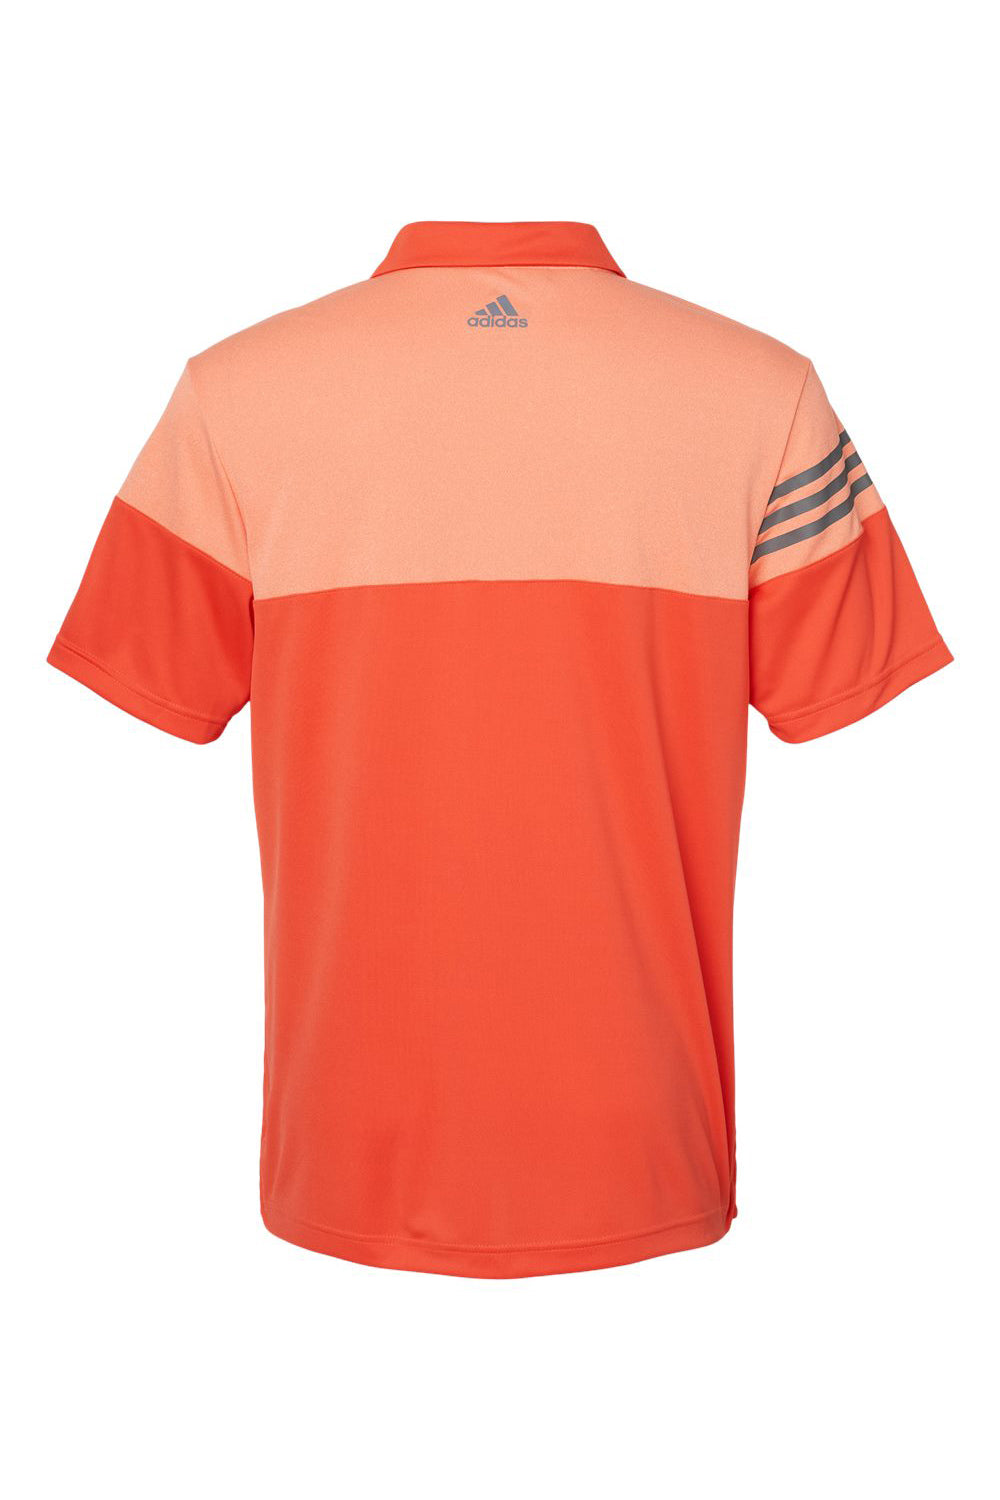 Adidas A213 Mens 3 Stripes Heathered Colorblock Short Sleeve Polo Shirt Blaze Orange/Vista Grey Flat Back